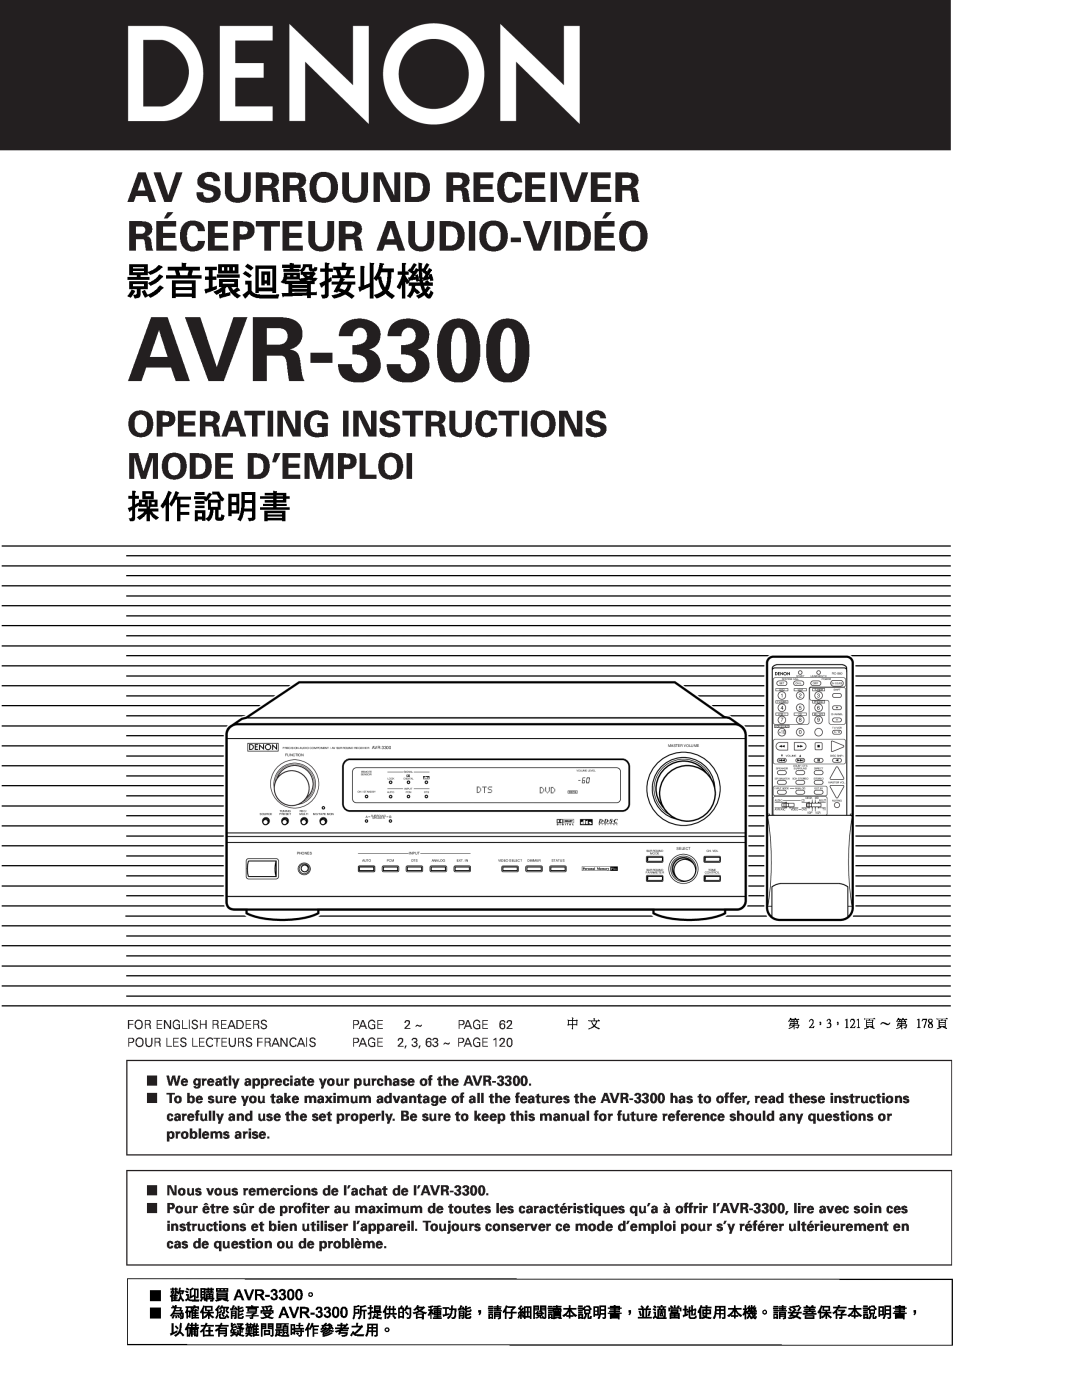 Denon AVR-3300 manual Operating Instructions Mode D’Emploi, Av Surround Receiver Récepteur Audio-Vidéo 